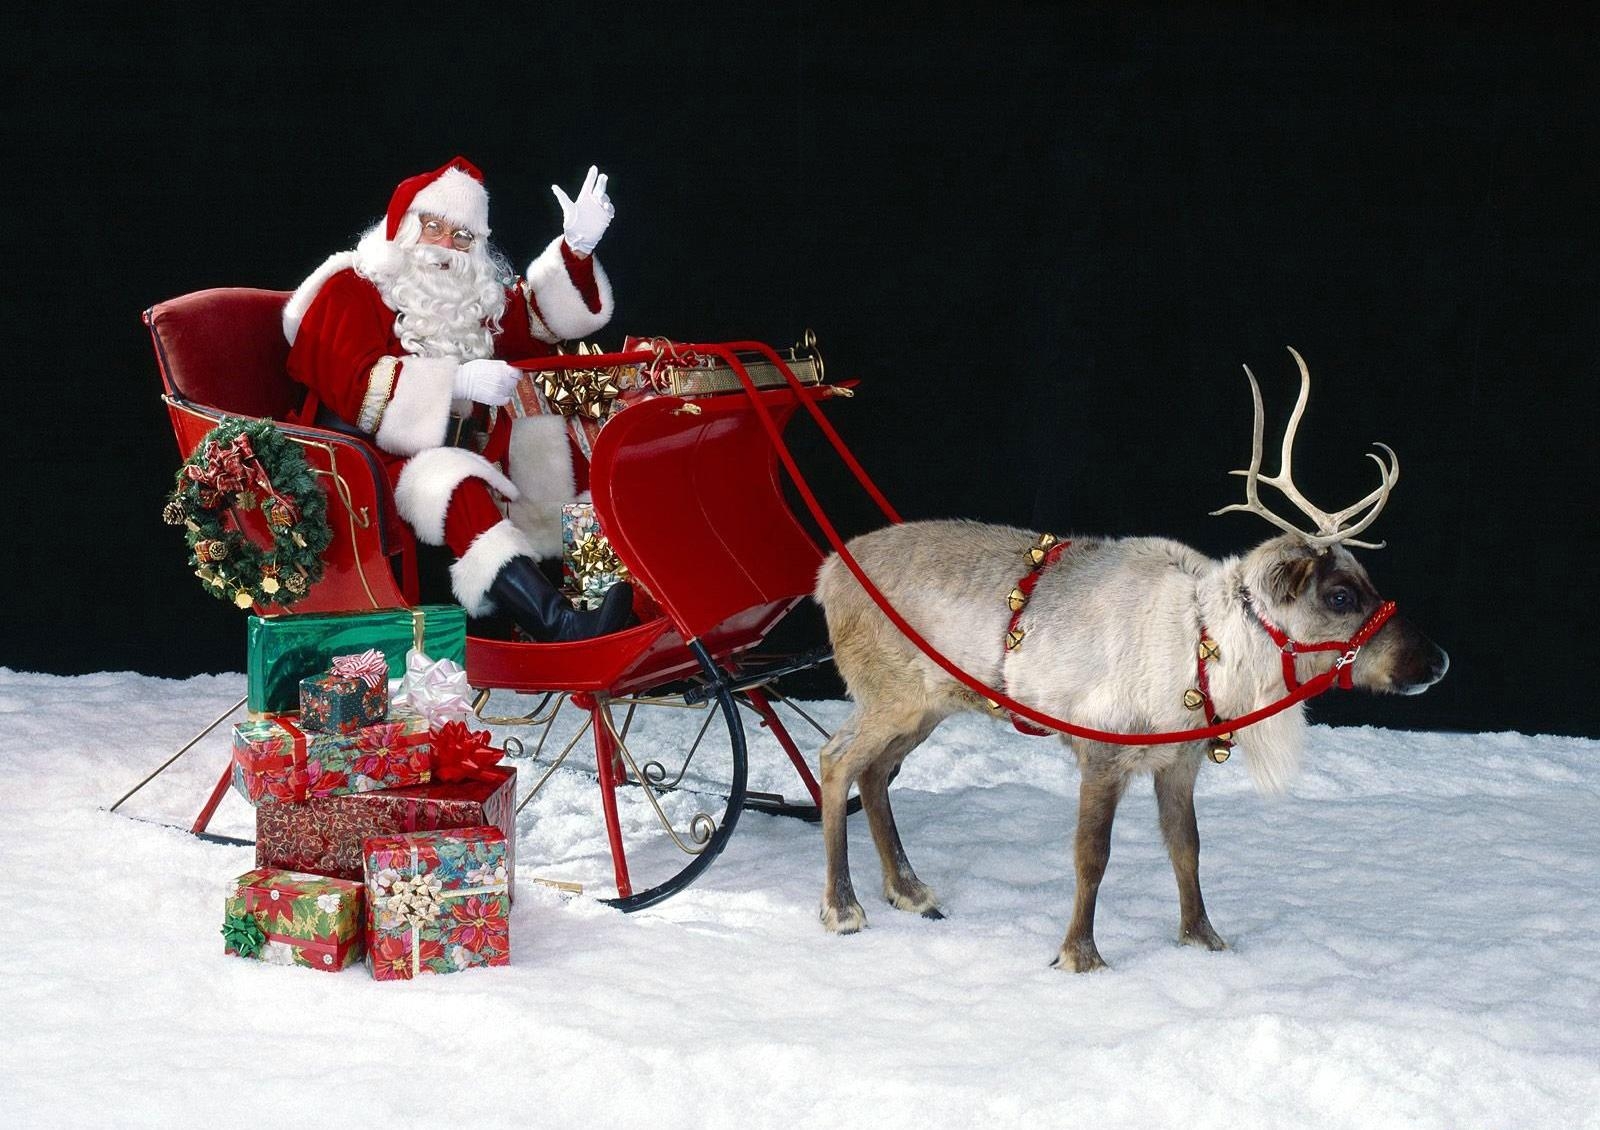 holidays, santa claus, snow, deer, bag, sleigh, sledge, sack, presents, gifts UHD